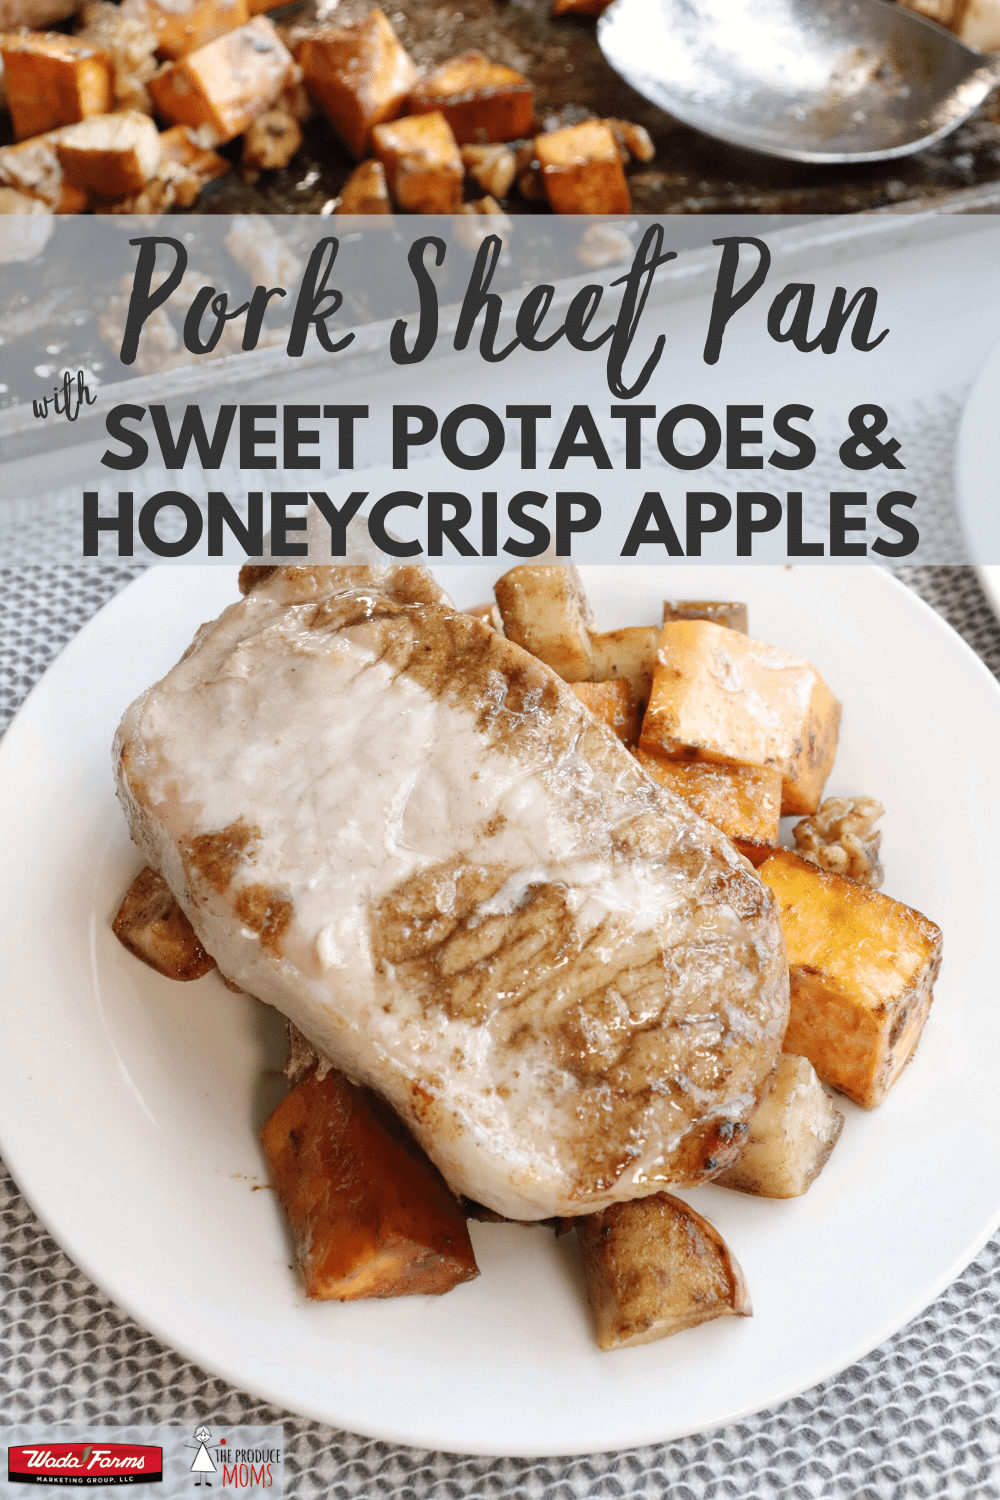 Pork Sheet Pan with Sweet Potato and Apple